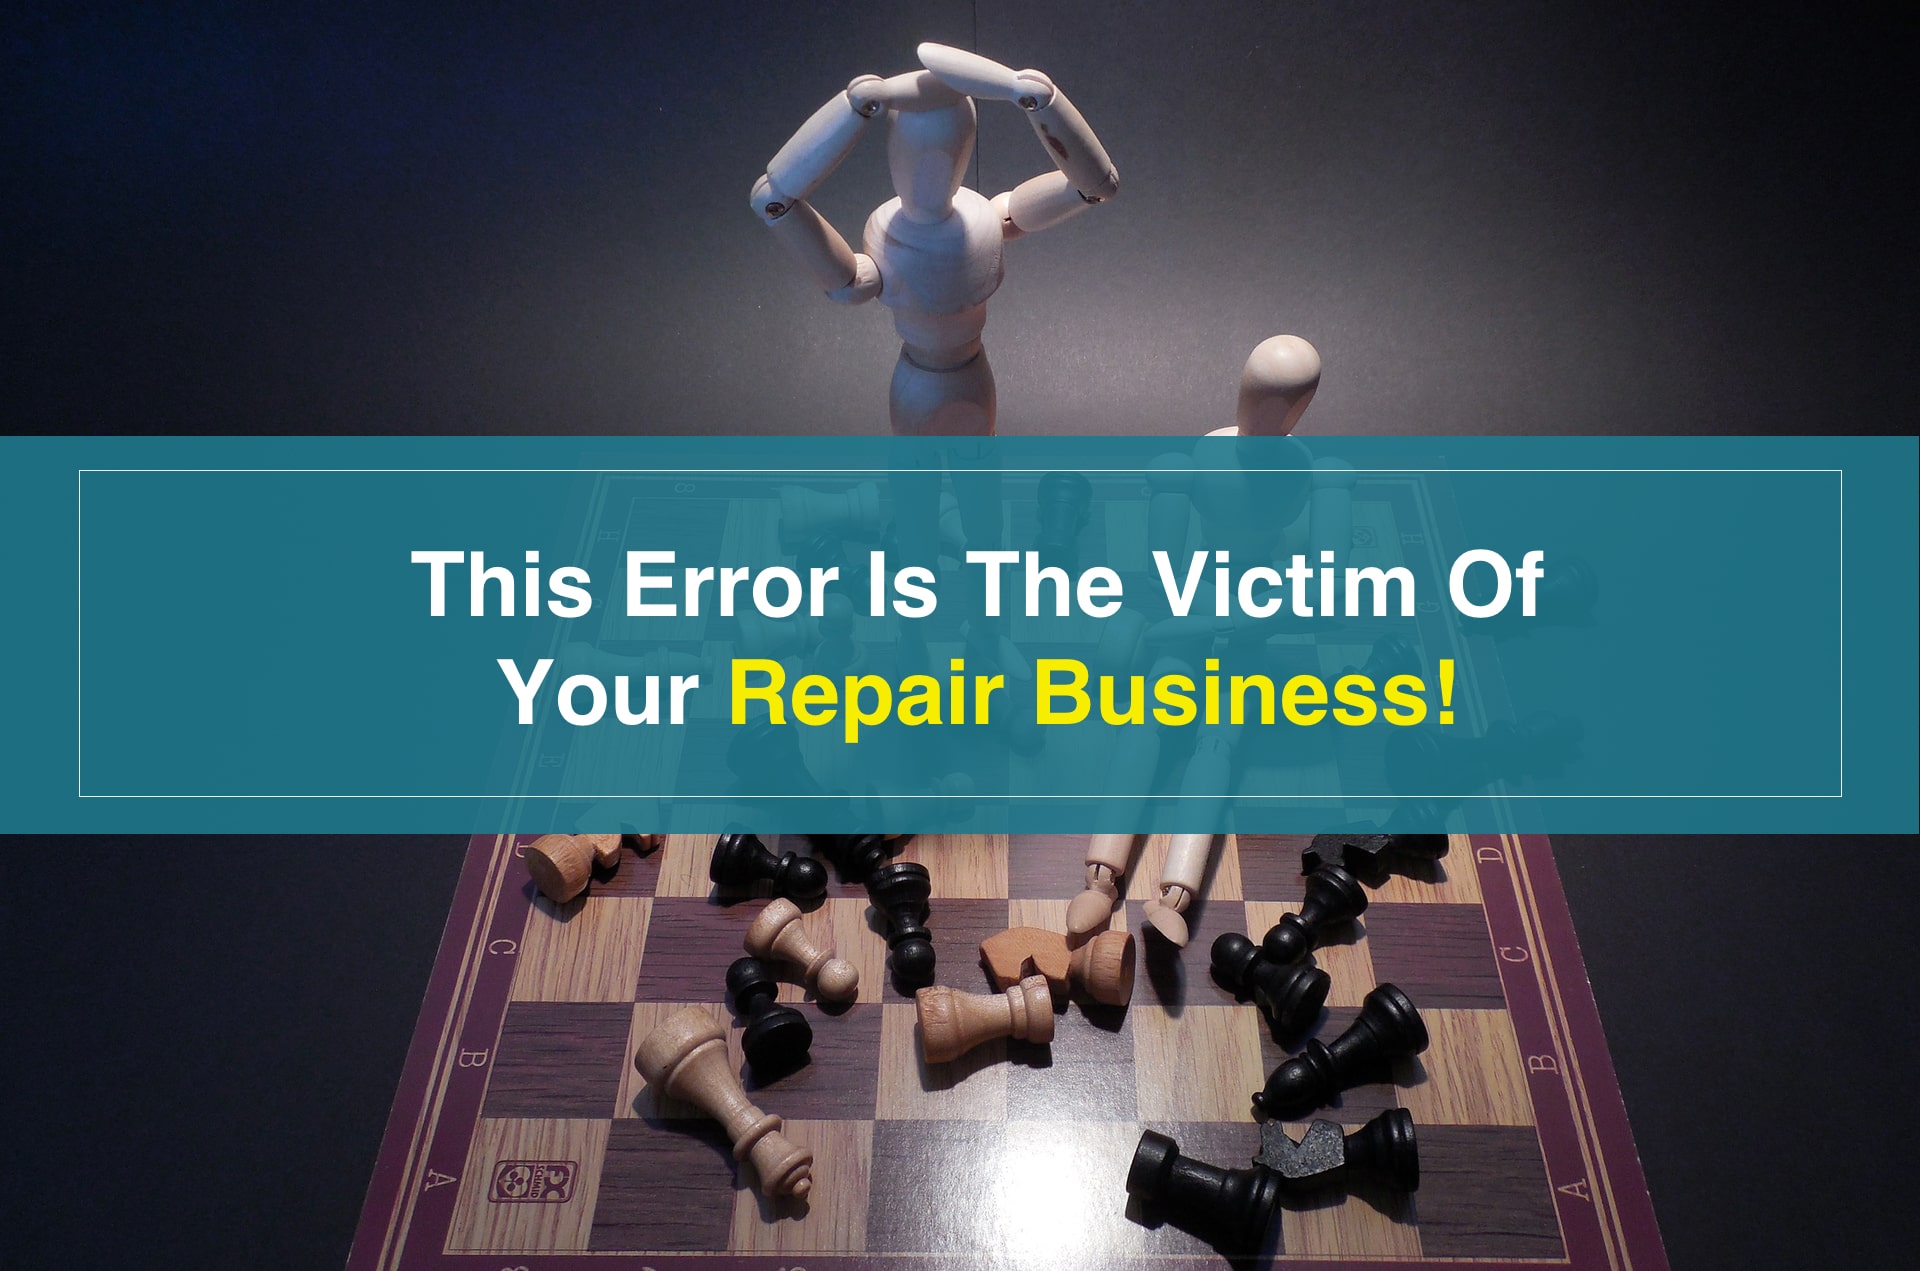 The biggest error in your repair business